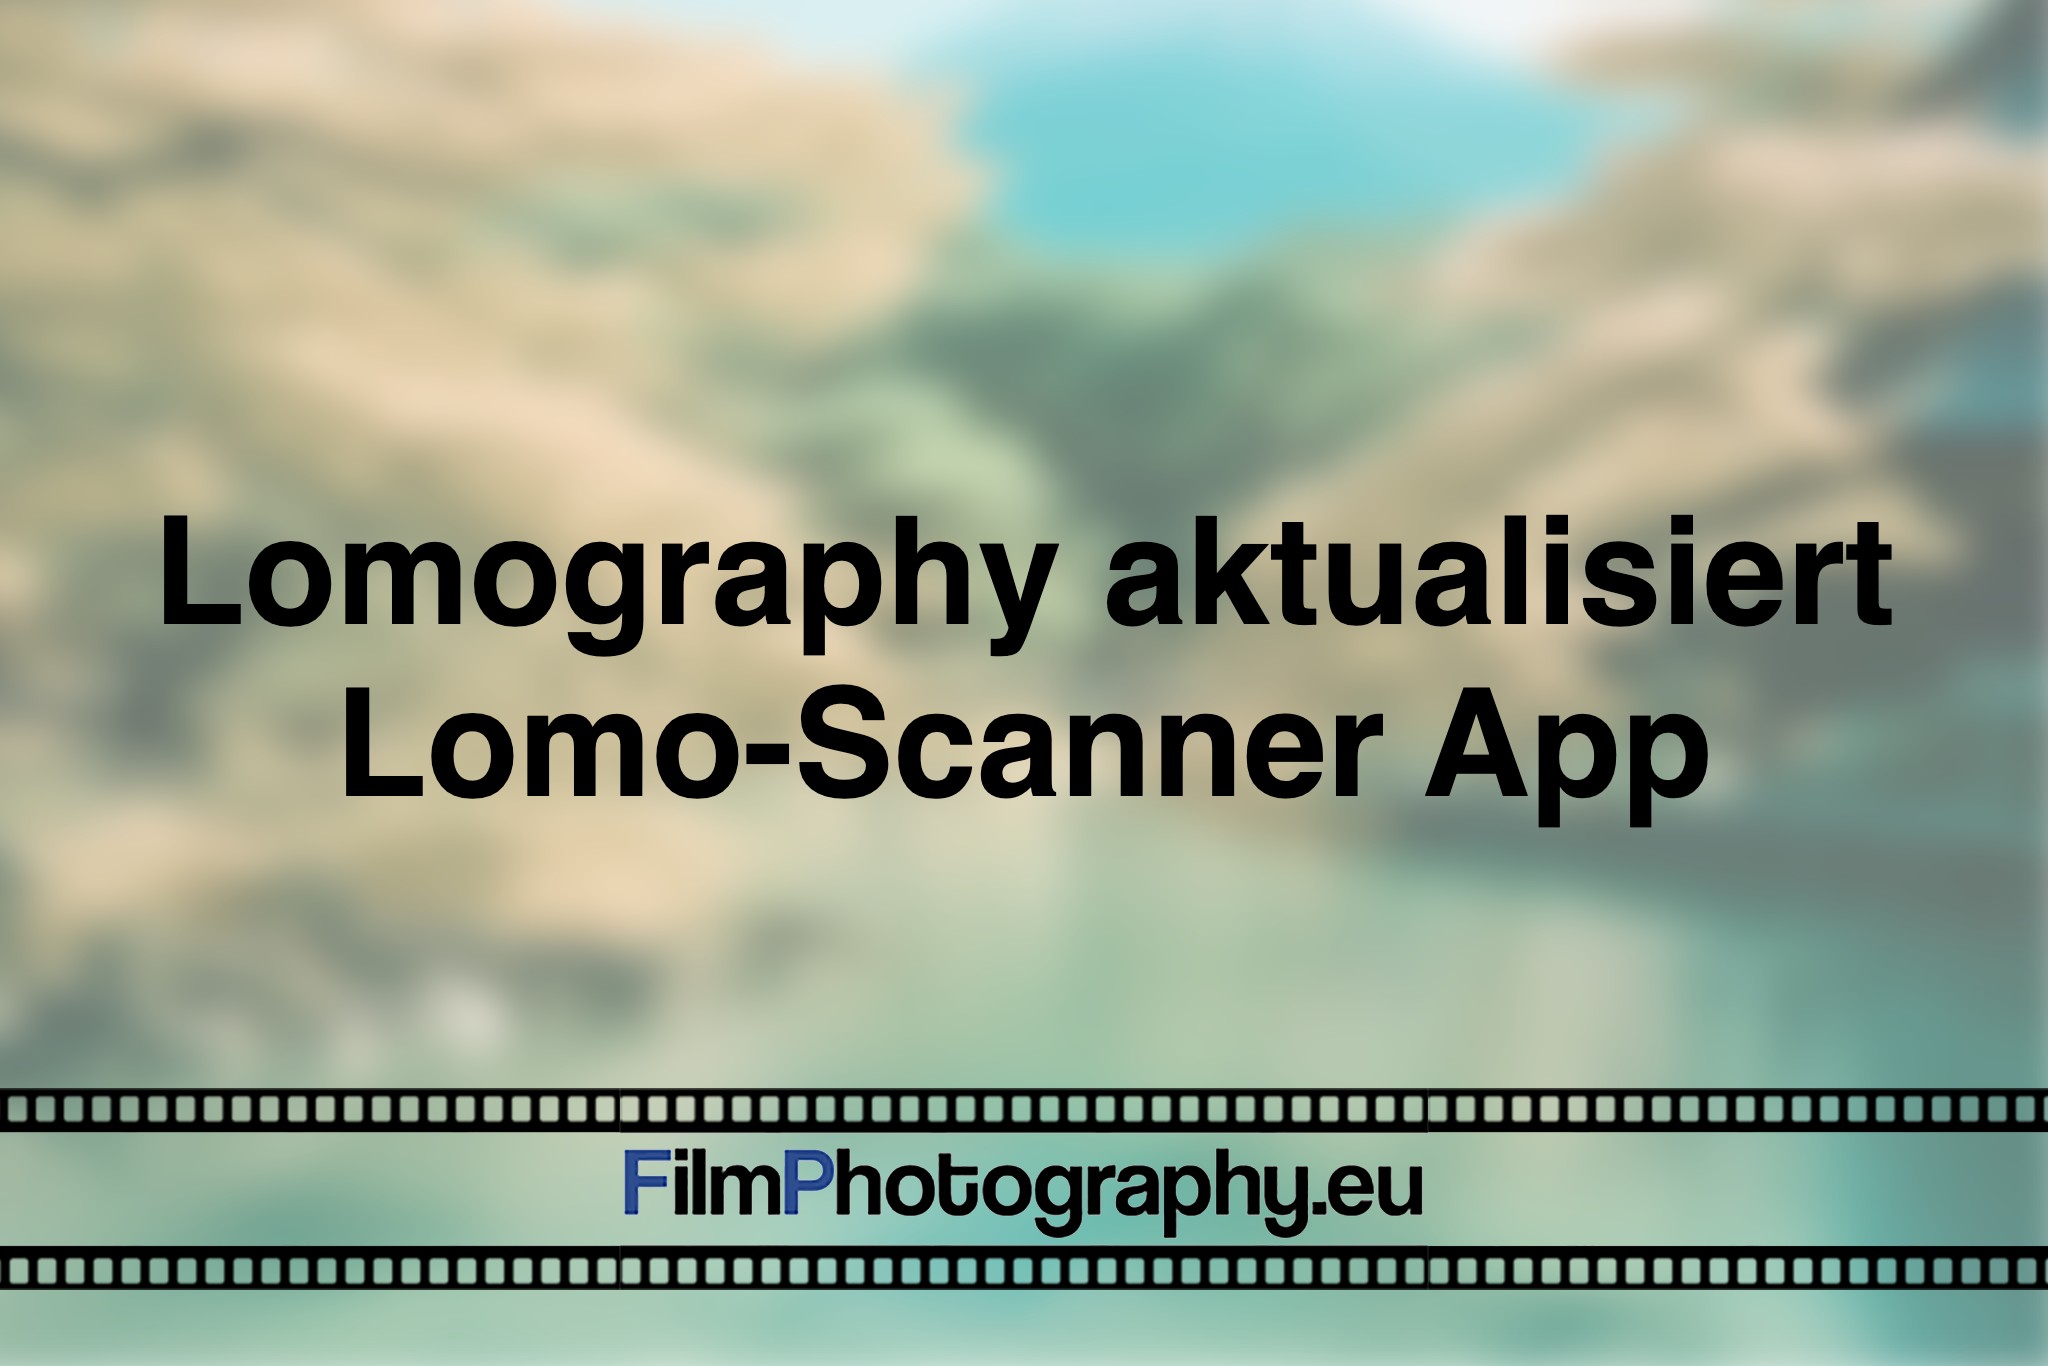 lomography-aktualisiert-lomo-scanner-app-photo-bnv